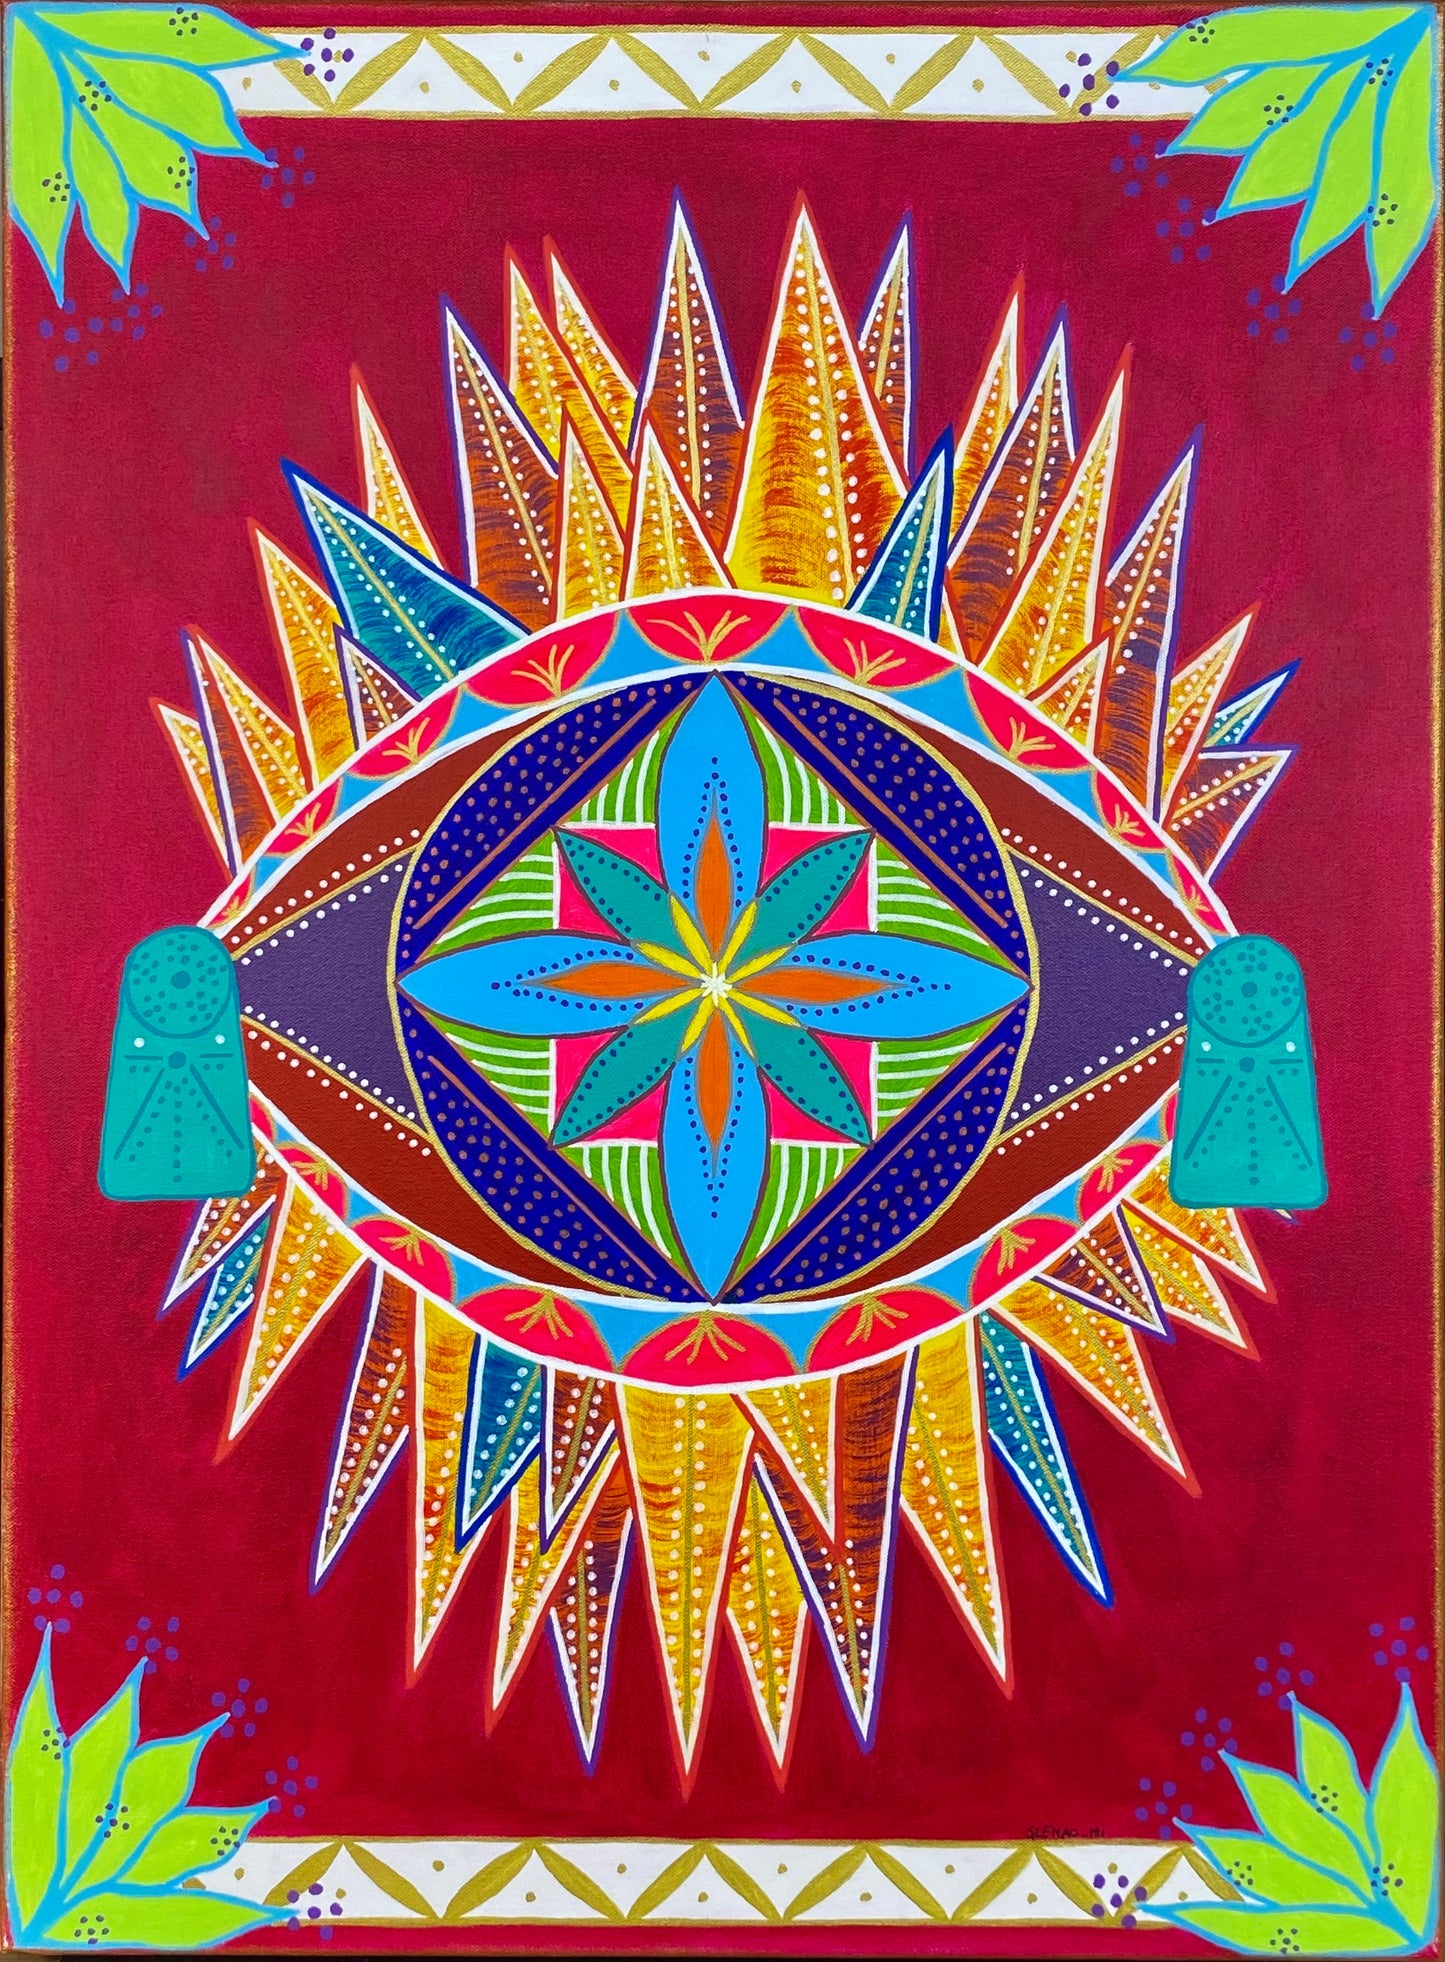 "The aztec eye", 73x54x2cm